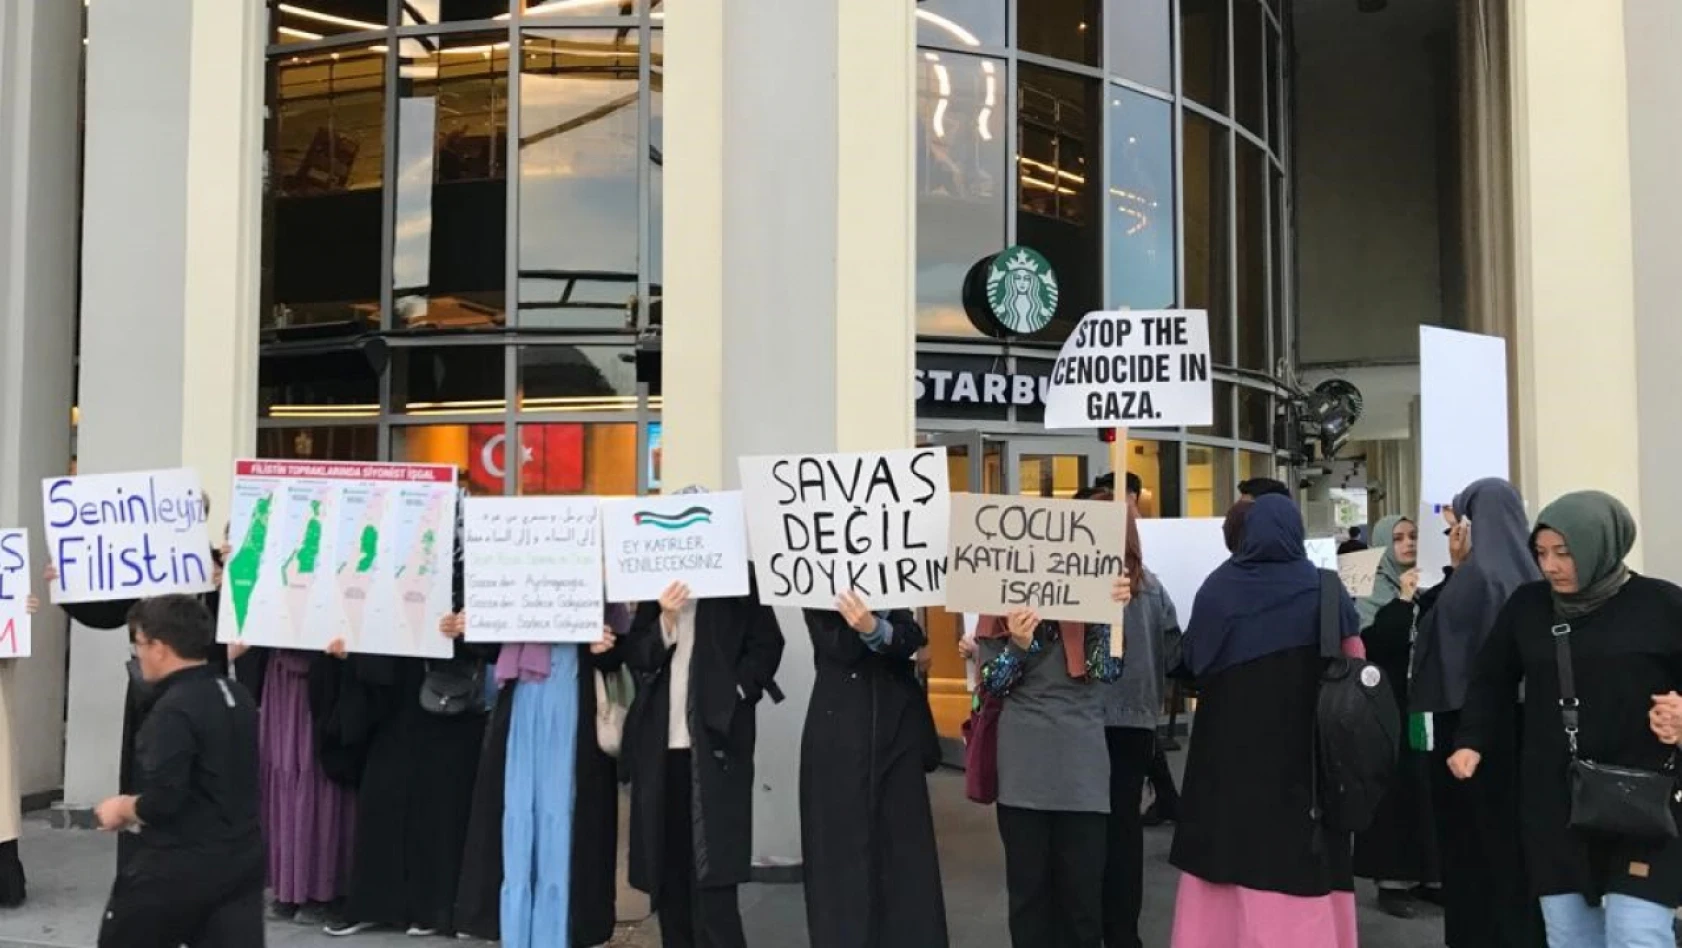 Kayseri'de Starbucks önünde İsrail protestosu